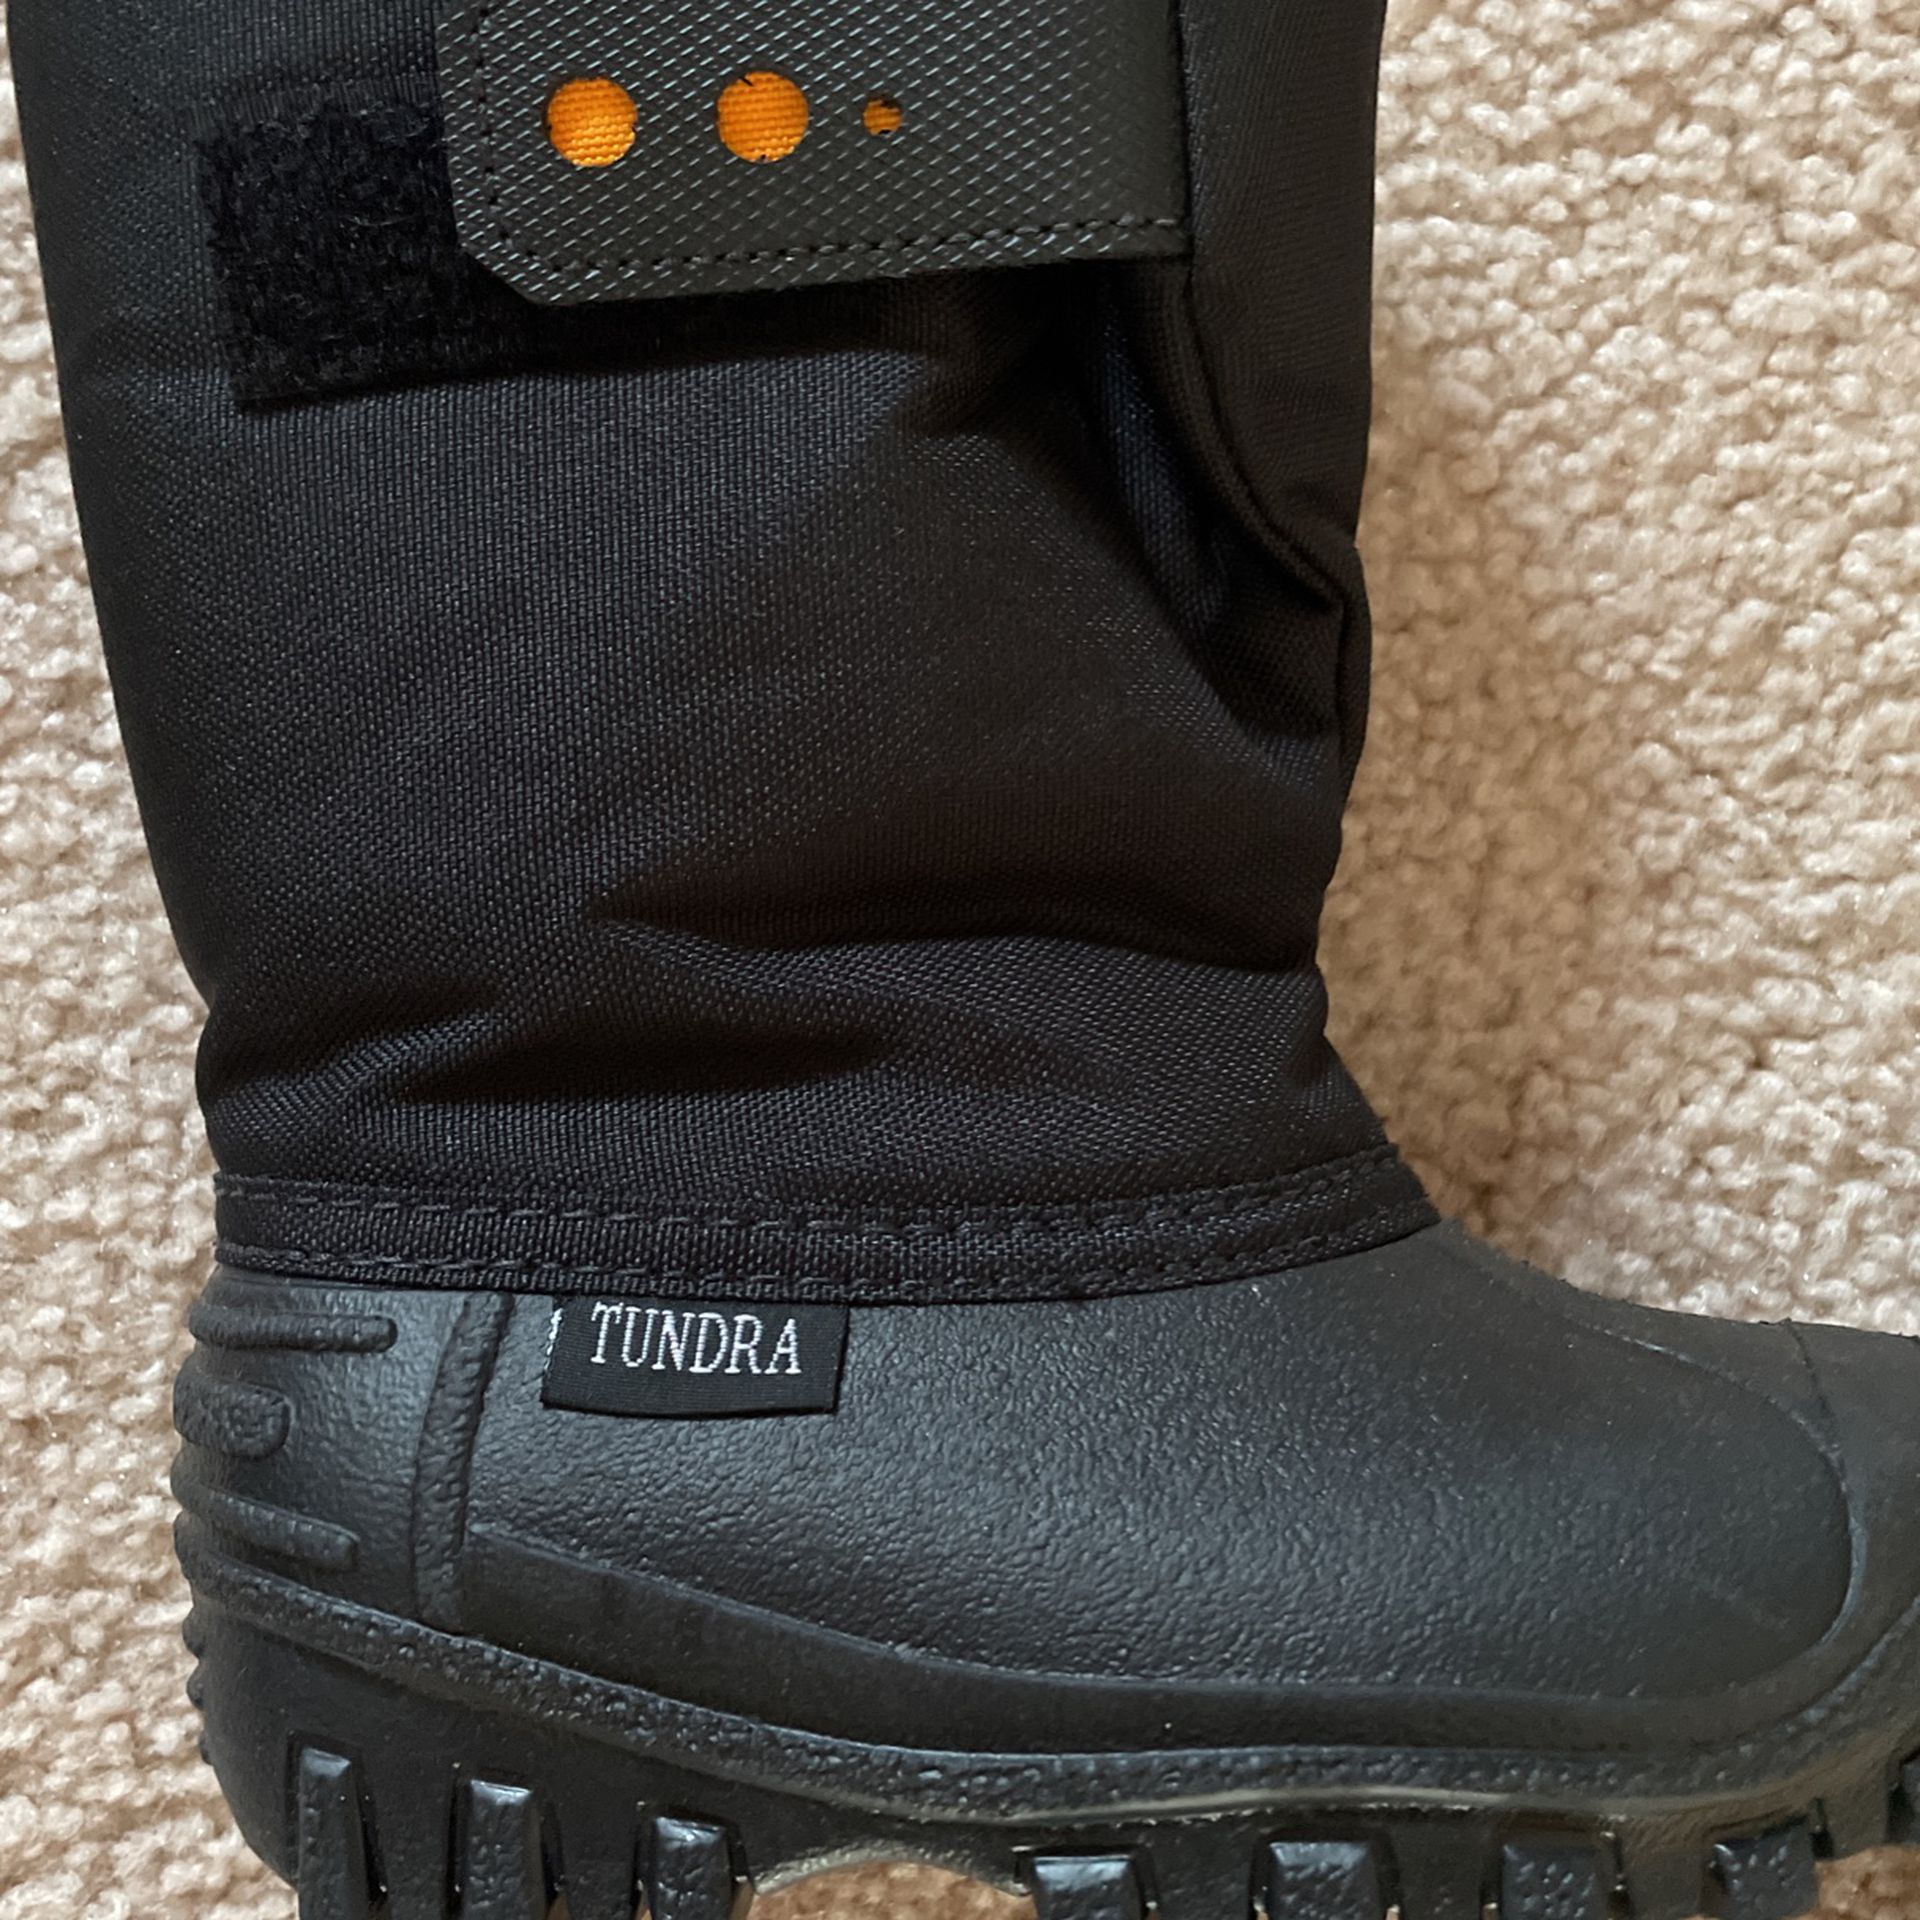 Tundra snow boots